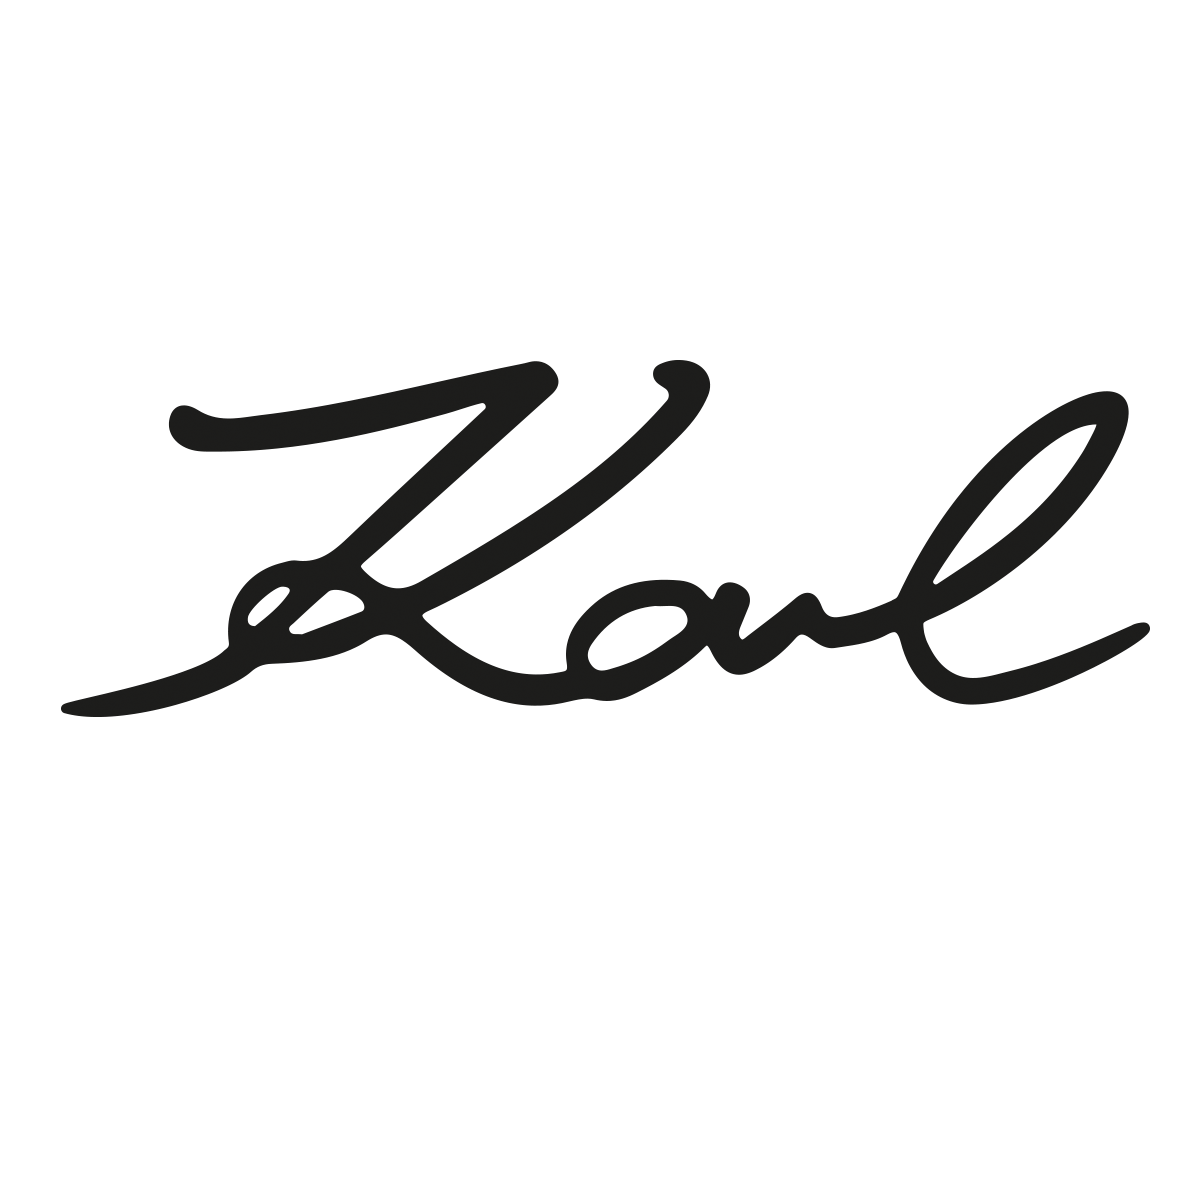 Karl - Karl Lagerfeld - Brands